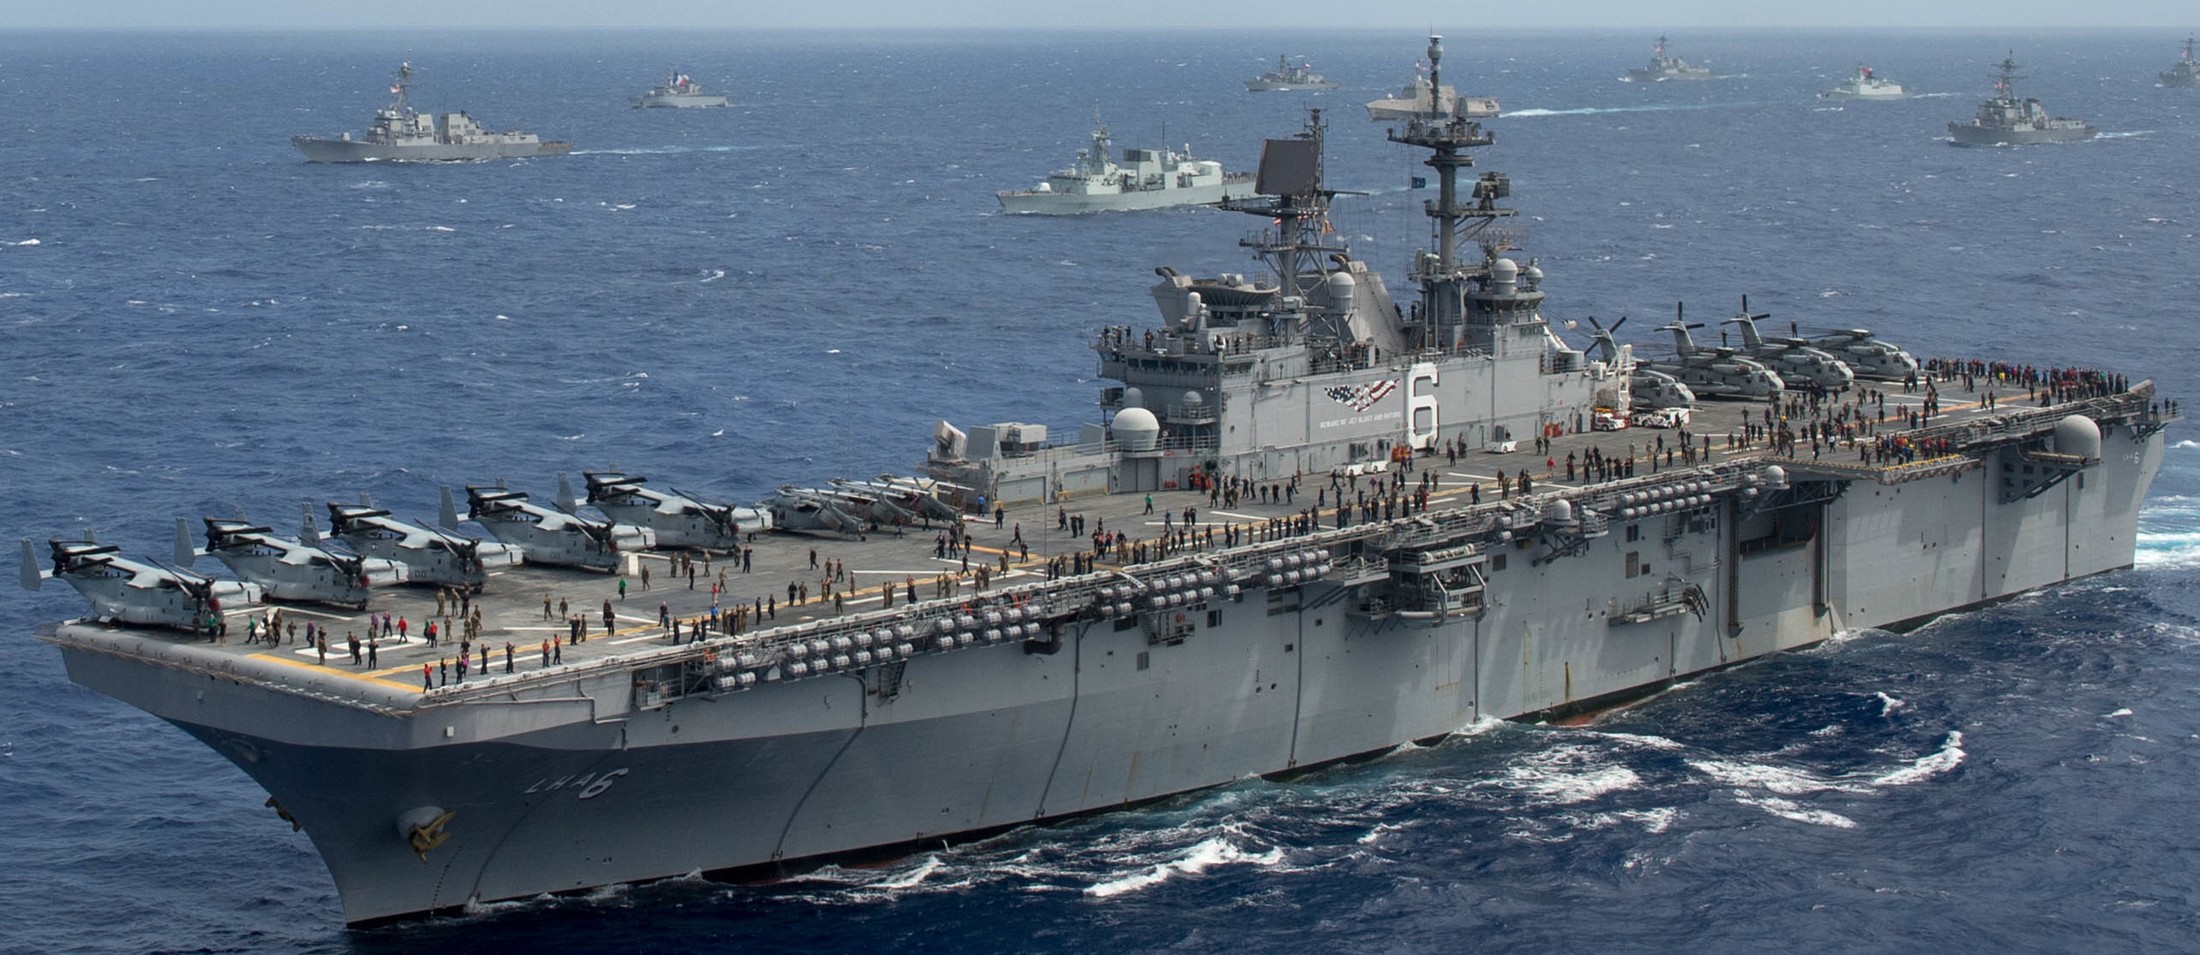 lha-6 uss america amphibious assault ship landing us navy exercise rimpac 115